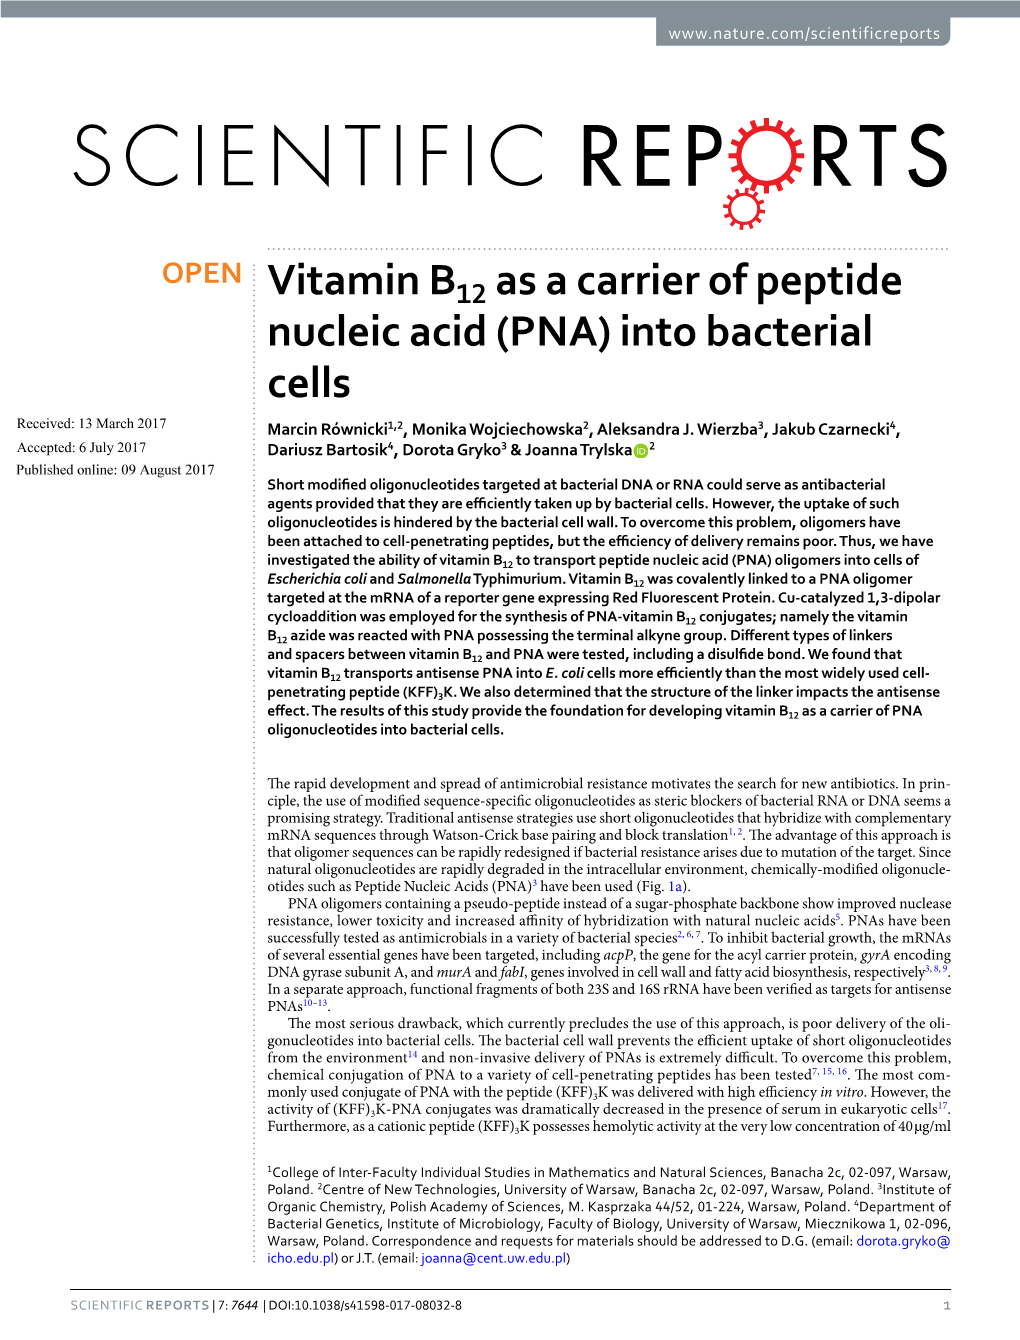 Vitamin B12 As a Carrier of Peptide Nucleic Acid (PNA) Into Bacterial Cells Received: 13 March 2017 Marcin Równicki1,2, Monika Wojciechowska2, Aleksandra J